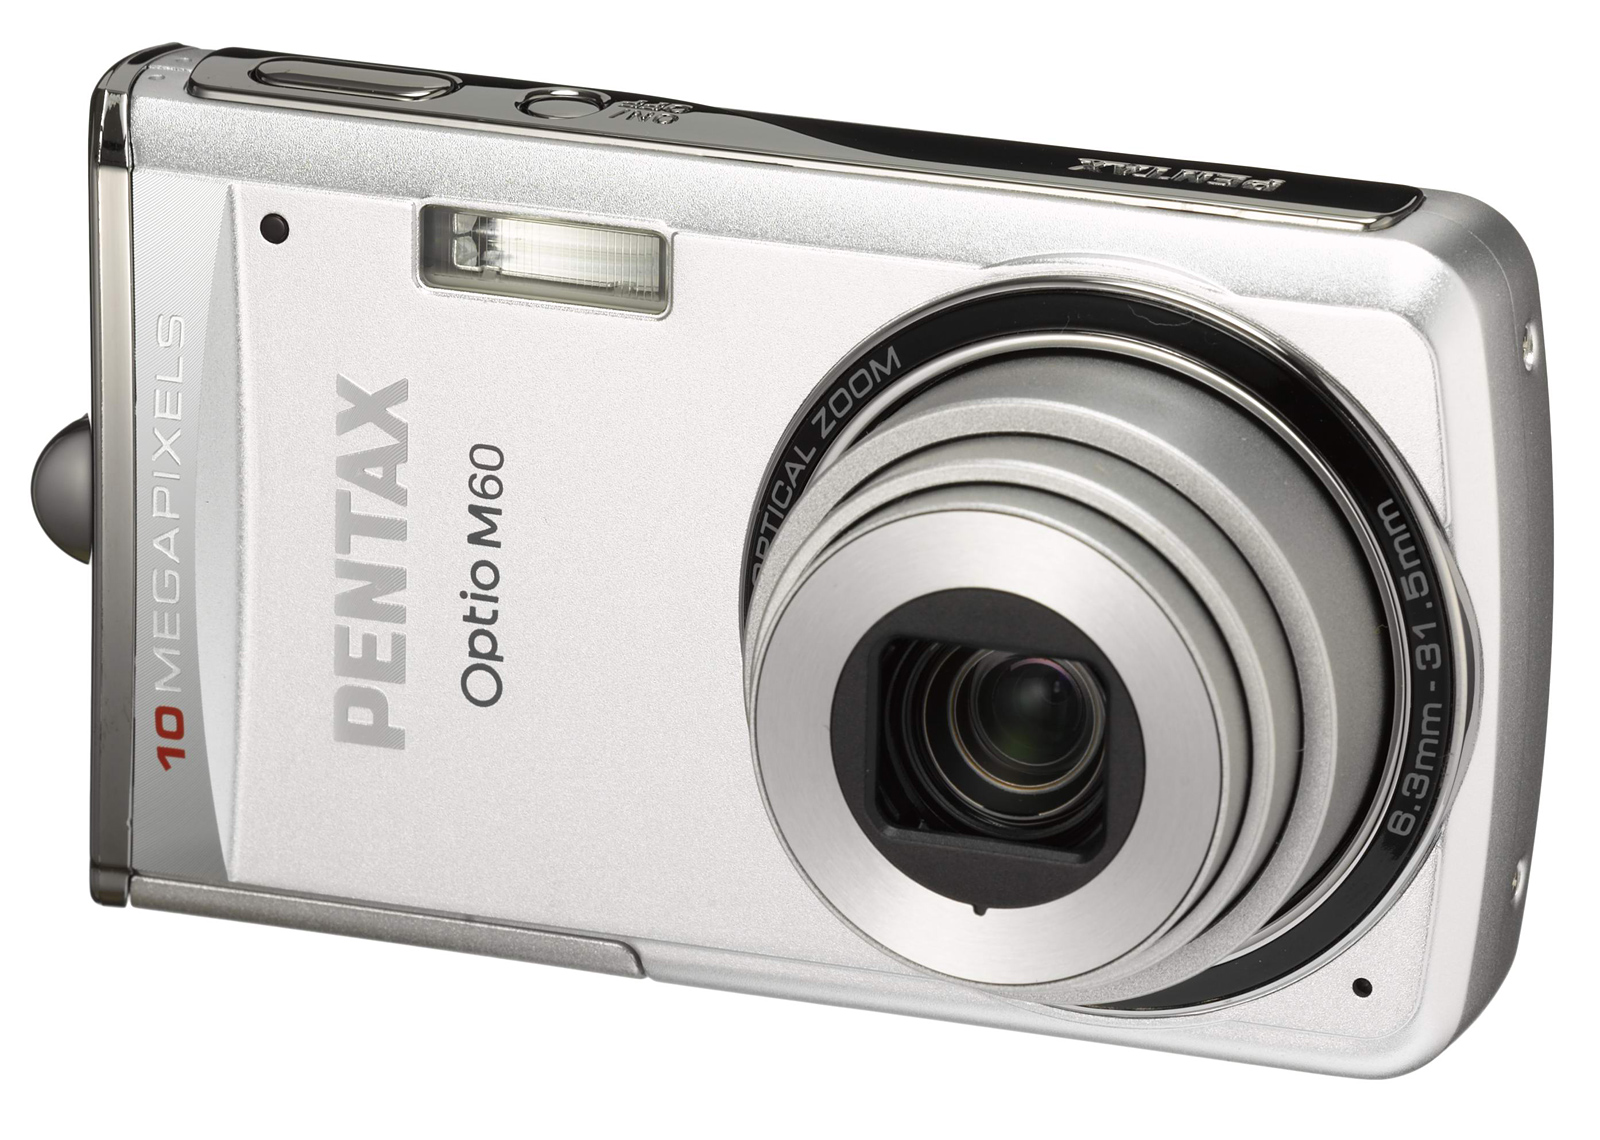 PENTAX Optio M60 - A standard-class digital compact camera that